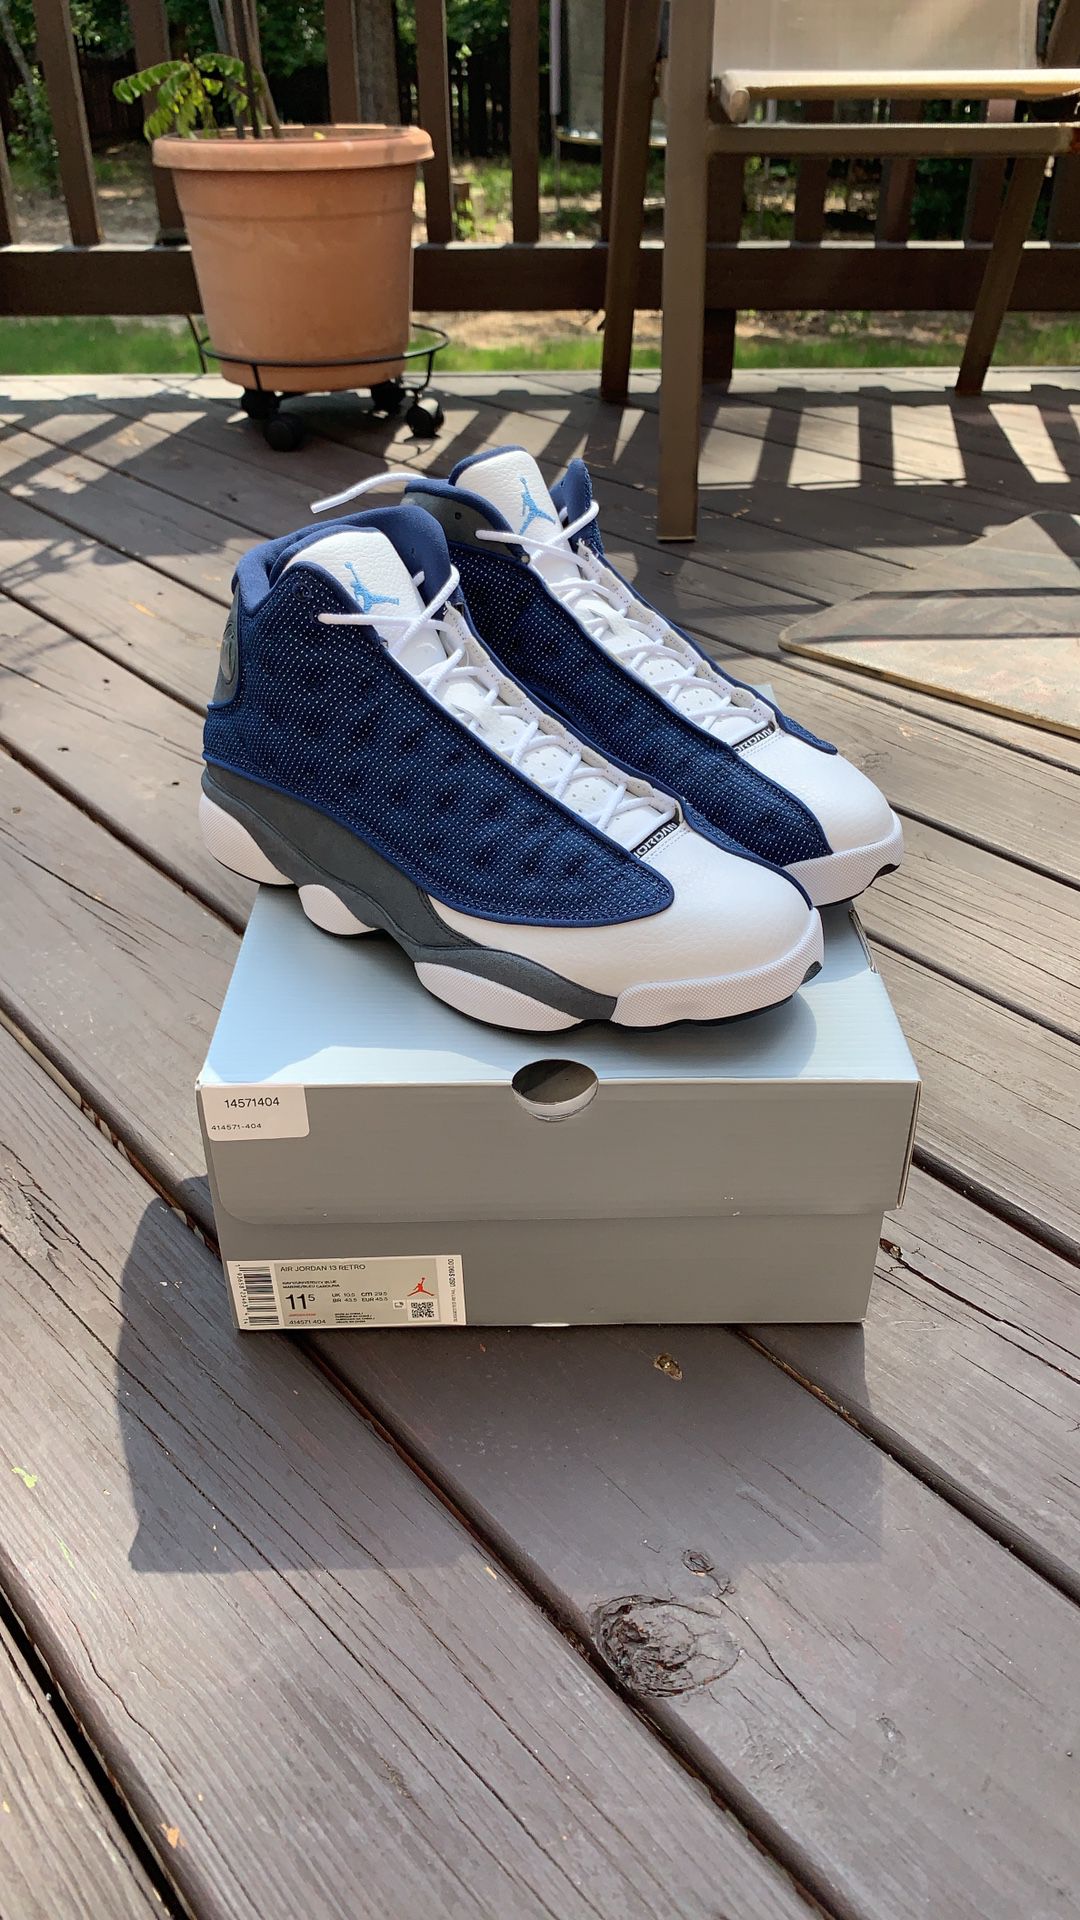 Jordan 13 “Flint” Size 11.5 Mens Basketball Shoes CLOSES AT 5 PM